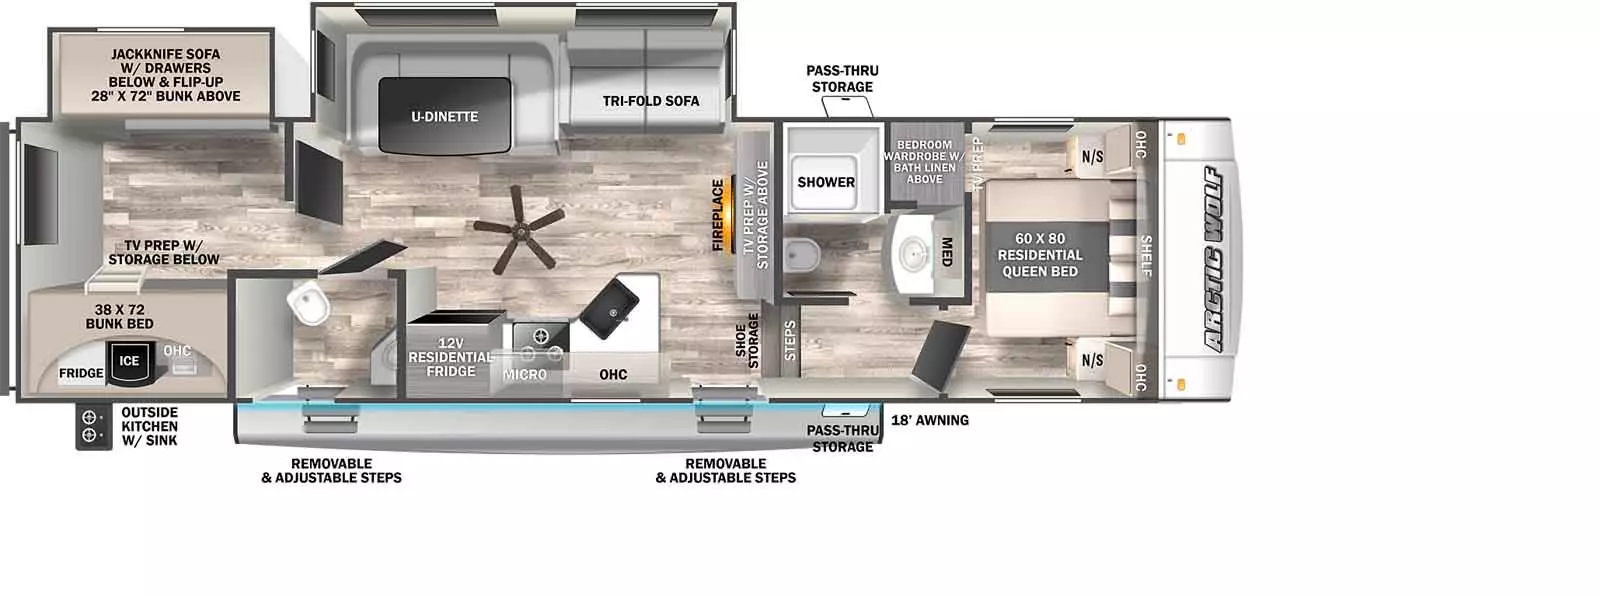 321BH Floorplan Image